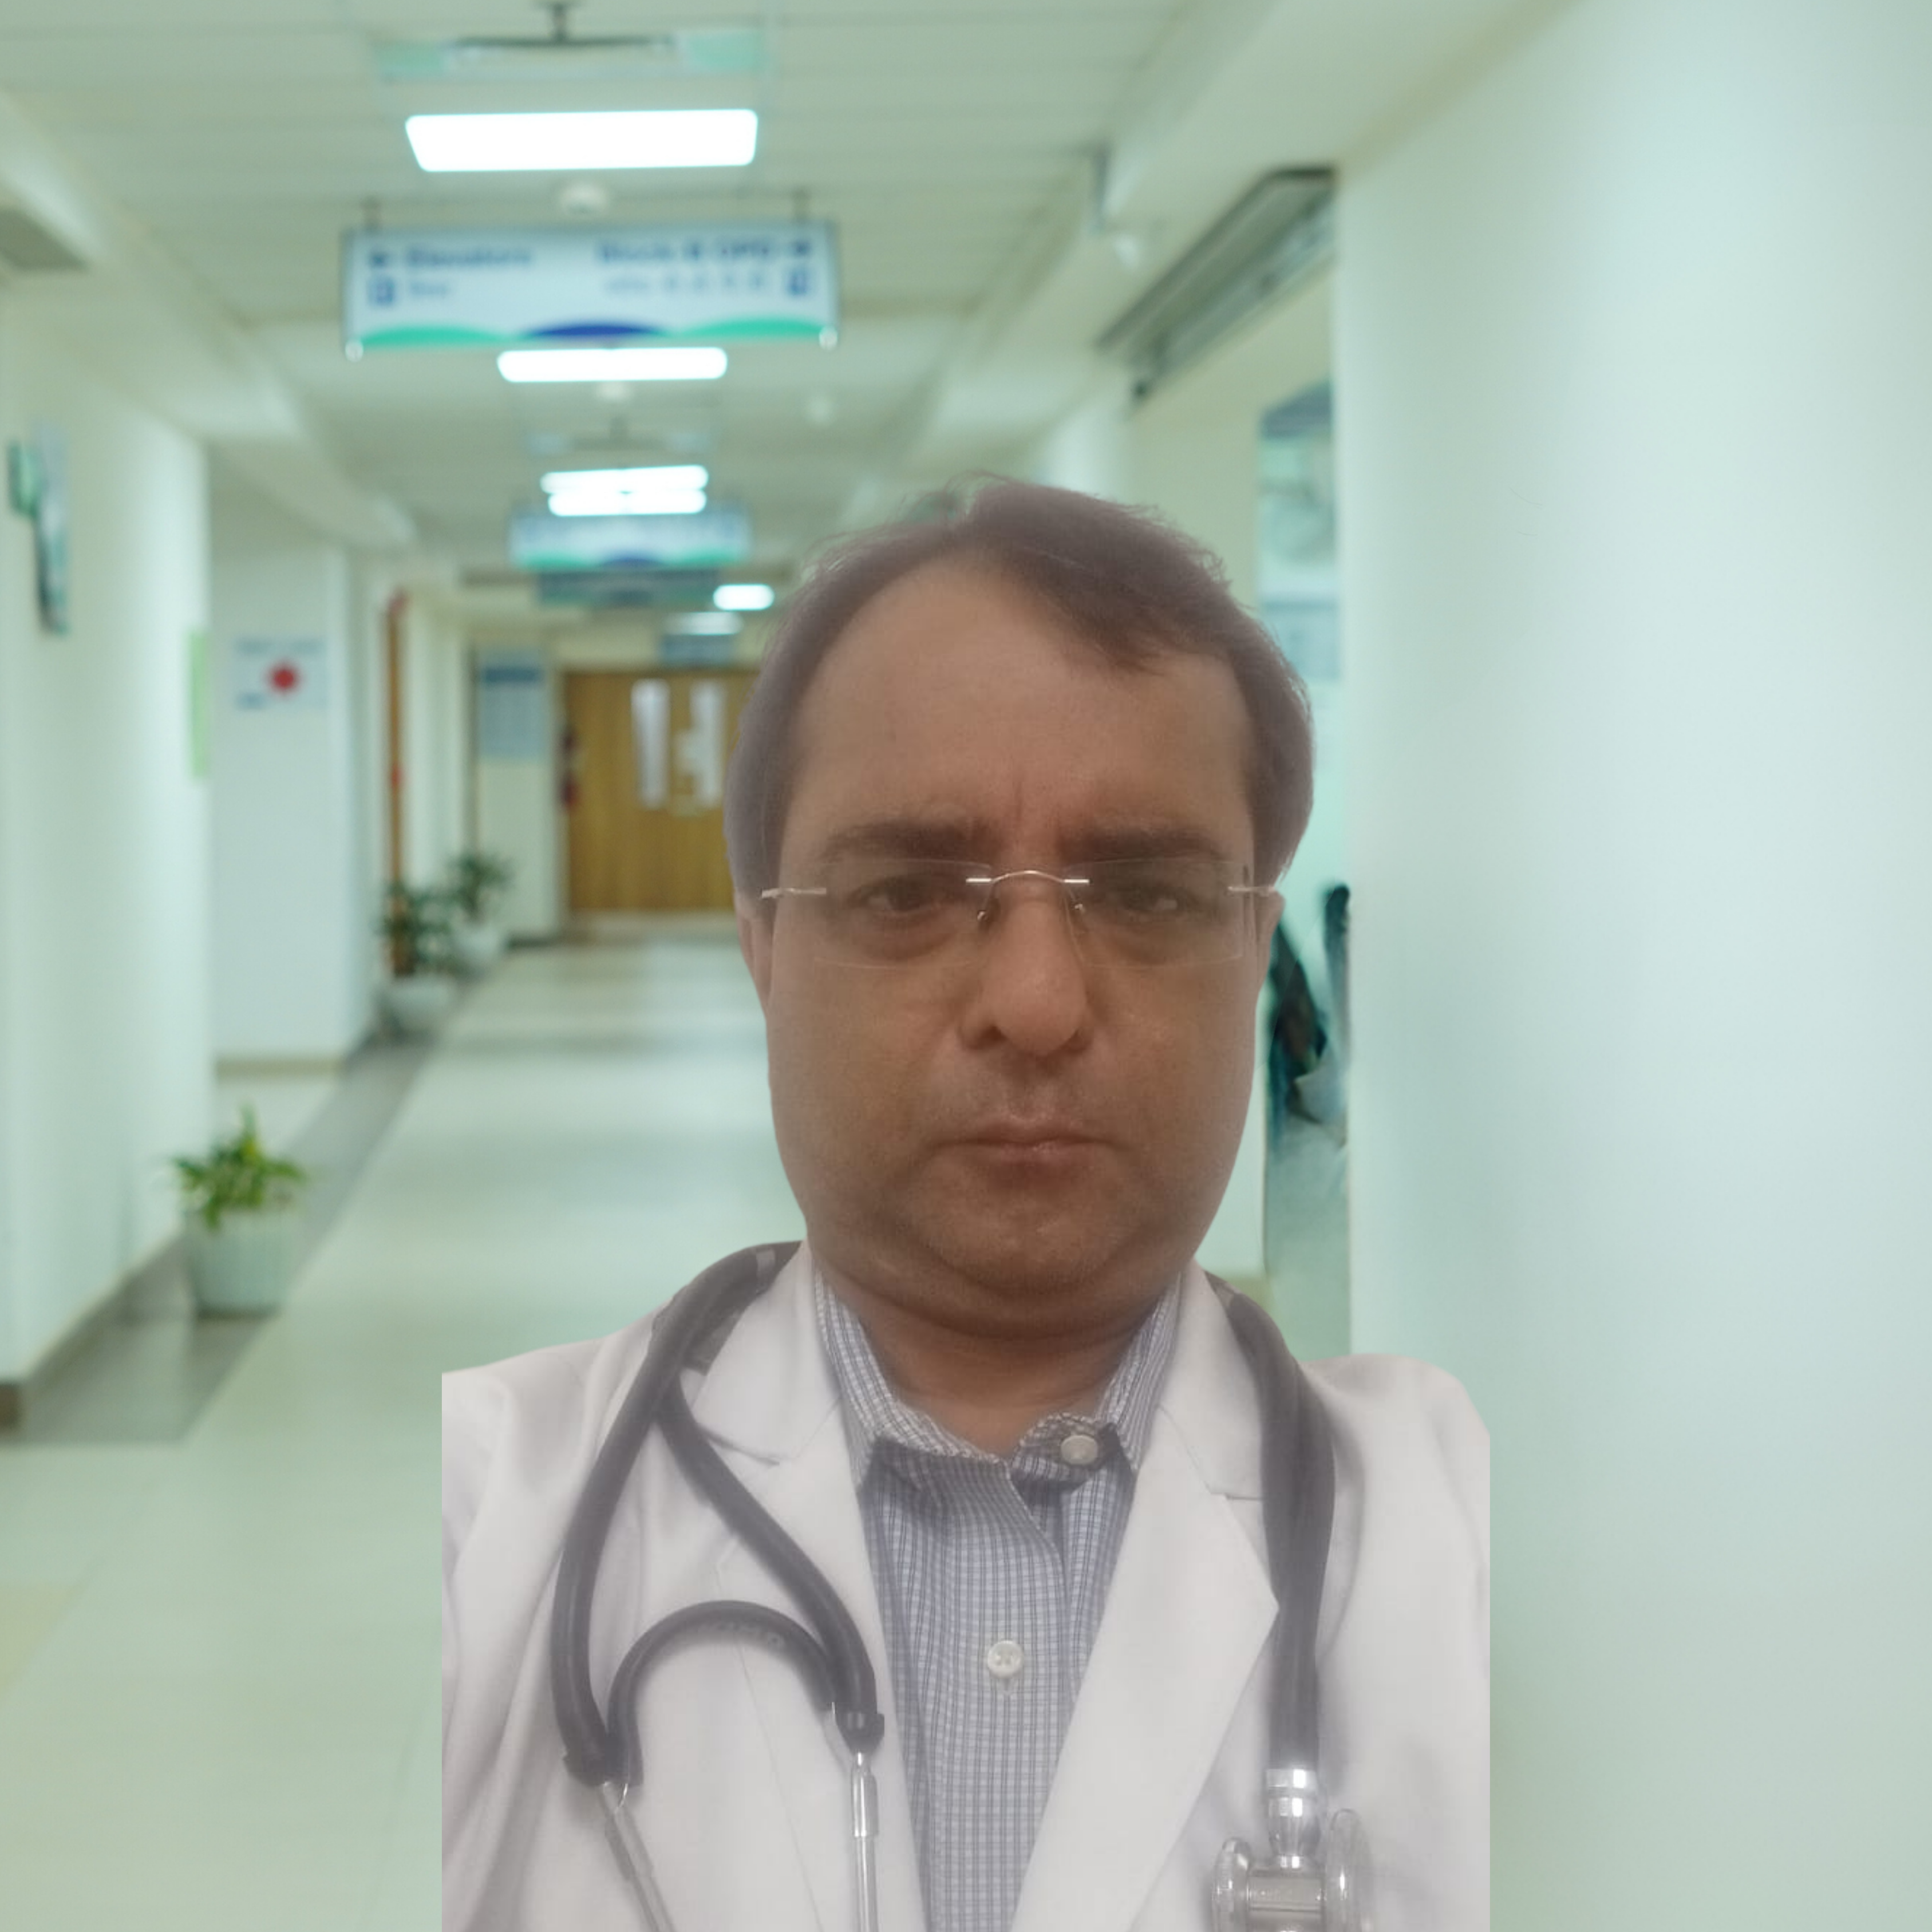 Dr. Praveen Jetly